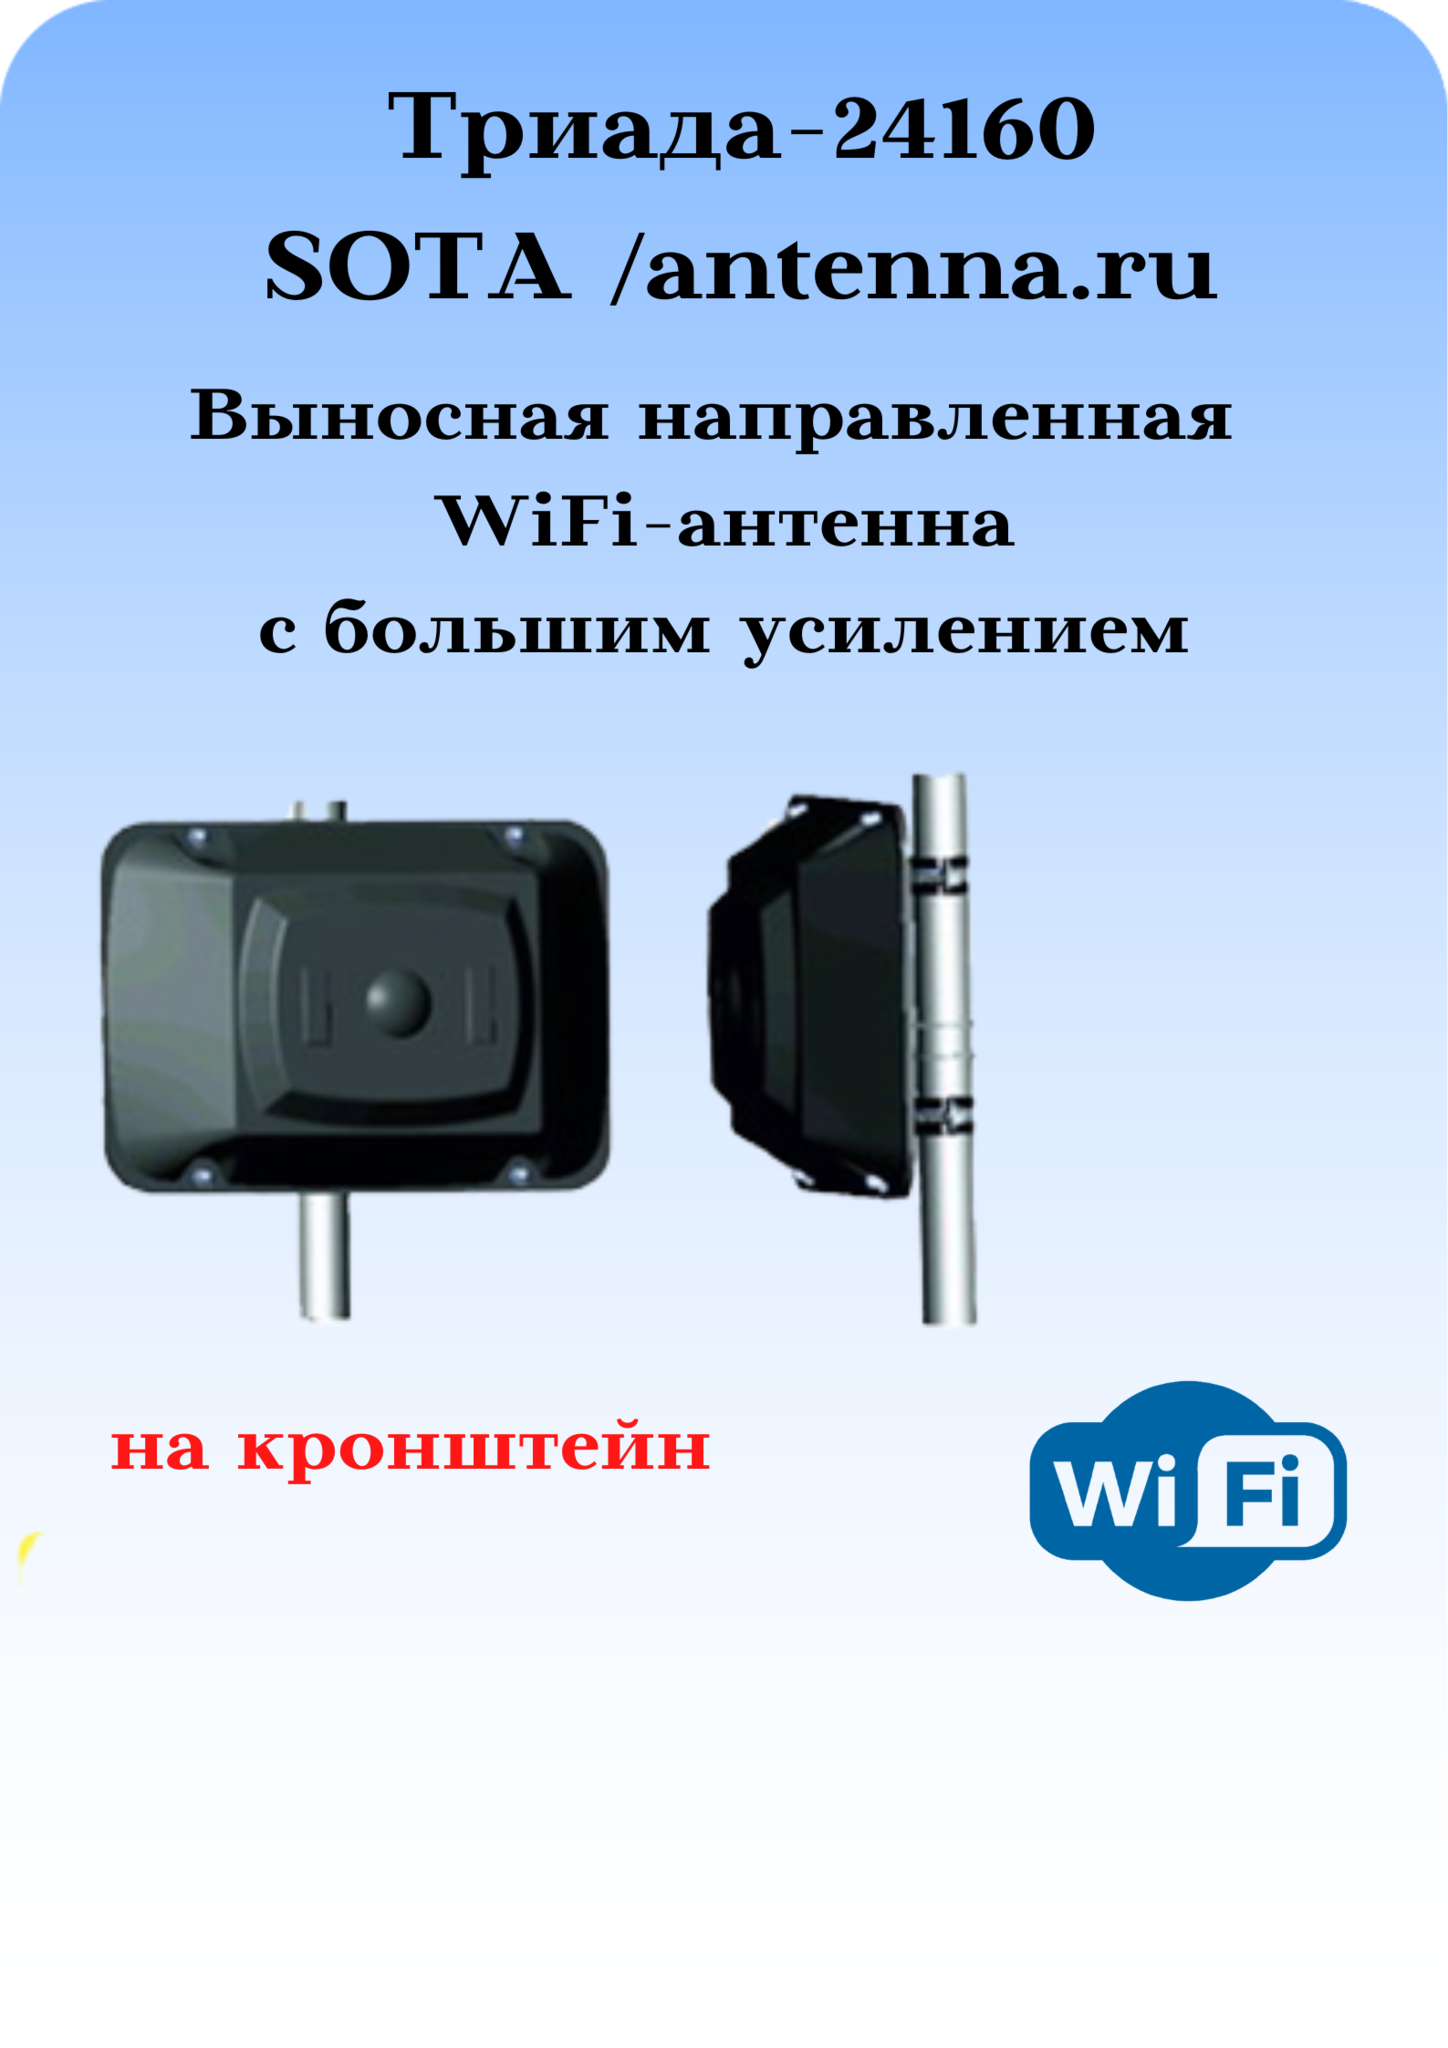 Направленные антенны WIFI